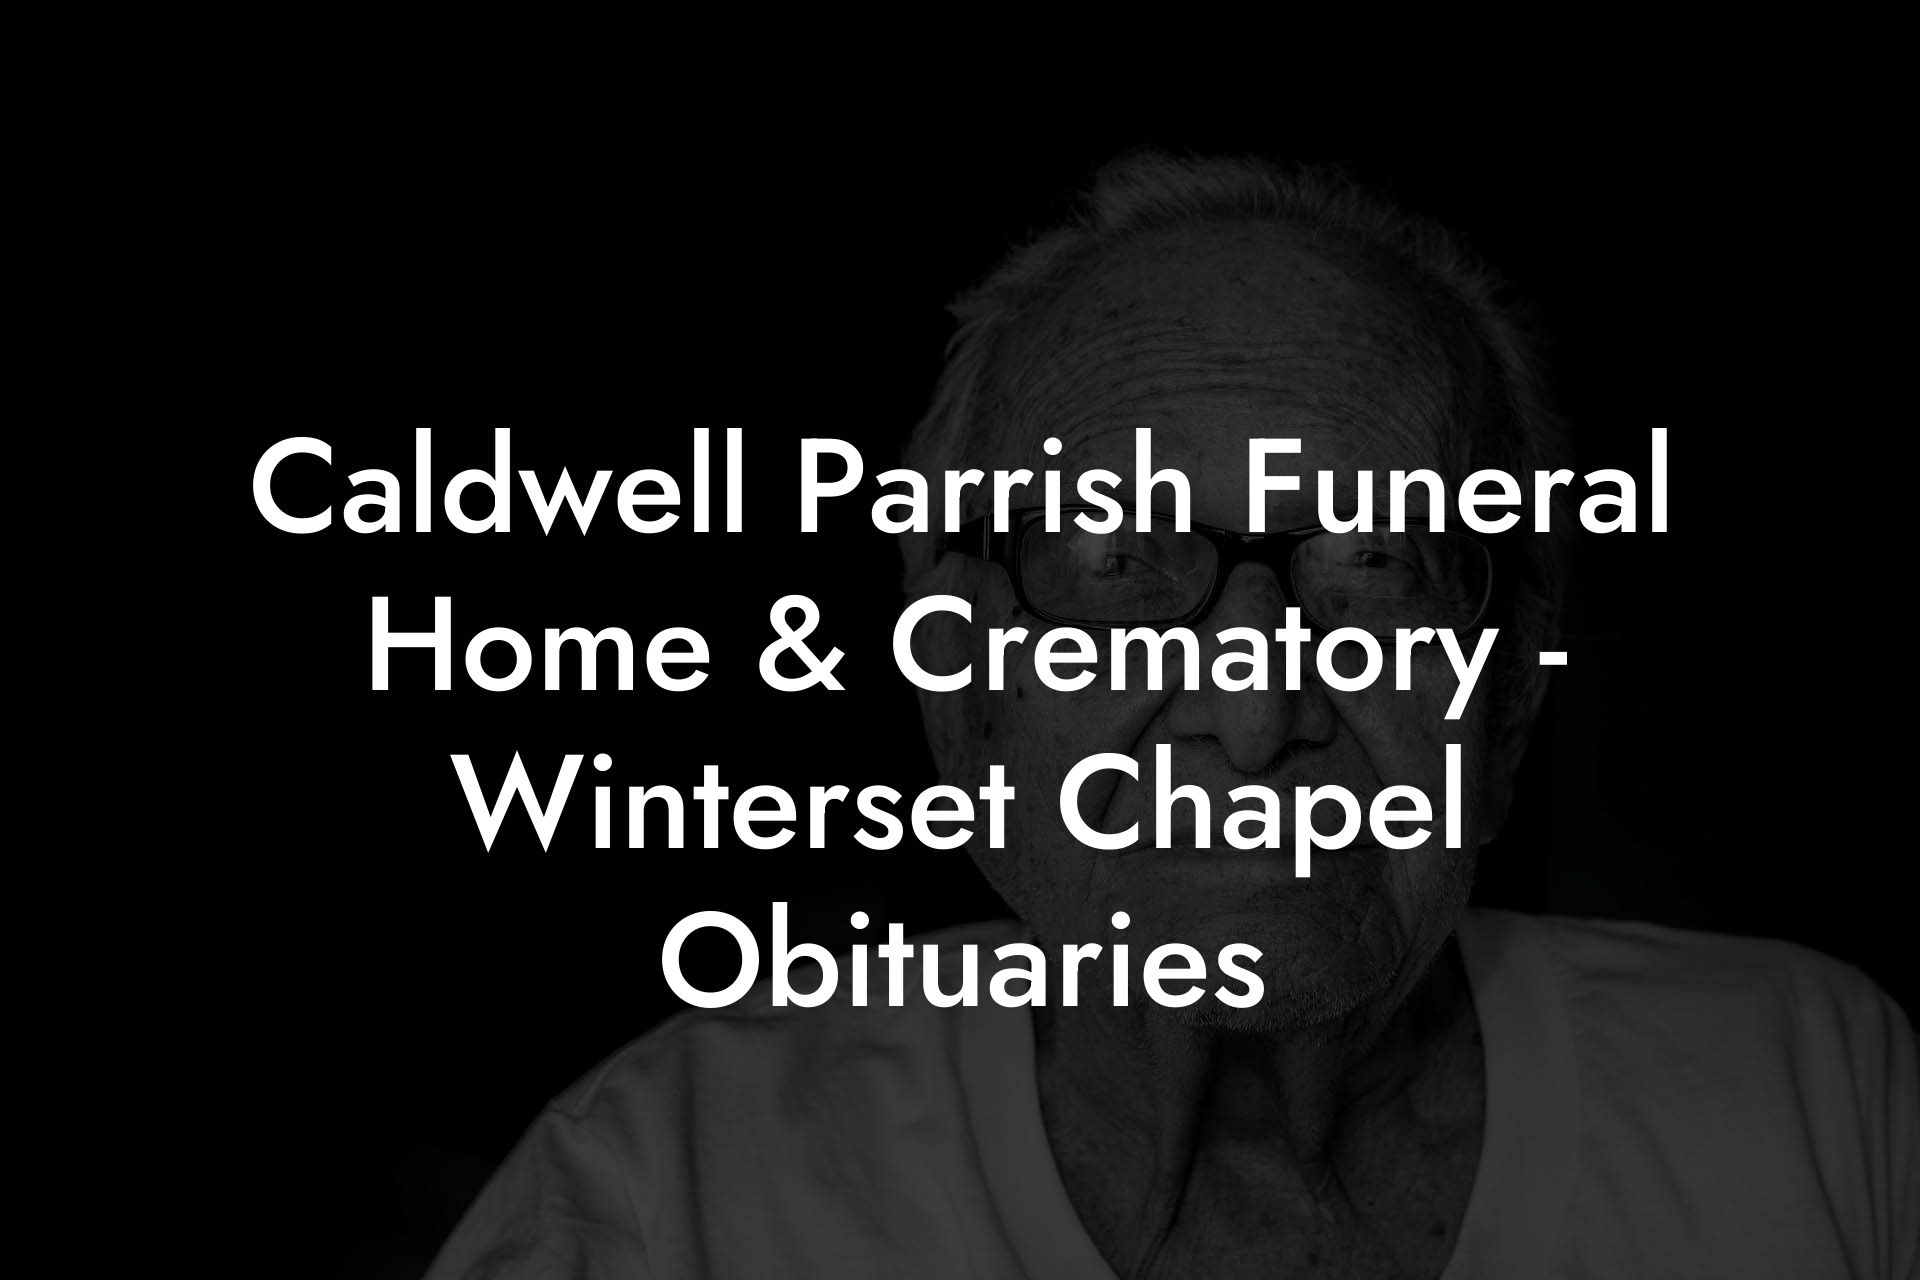 Caldwell Parrish Funeral Home & Crematory - Winterset Chapel Obituaries